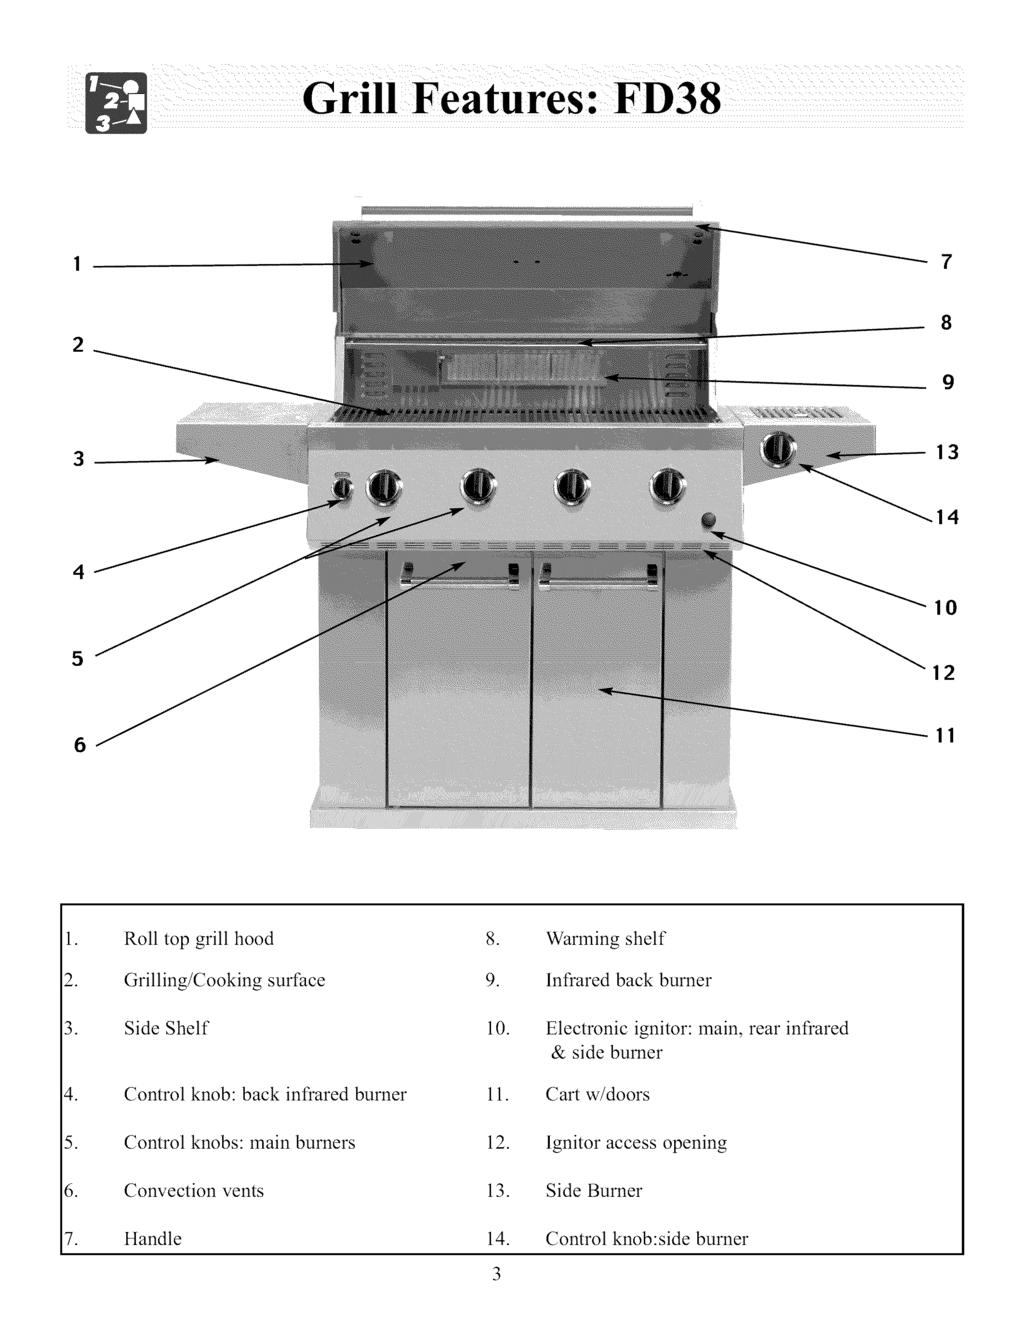 9 13 14 10 5 12 6 11 Roll top grill hood Warming shelf 2 Grilling/Cooking surface 9 Infrared back burner 3 Side Shelf" 10 Electronic ignitor: main, rear infrared & side burner